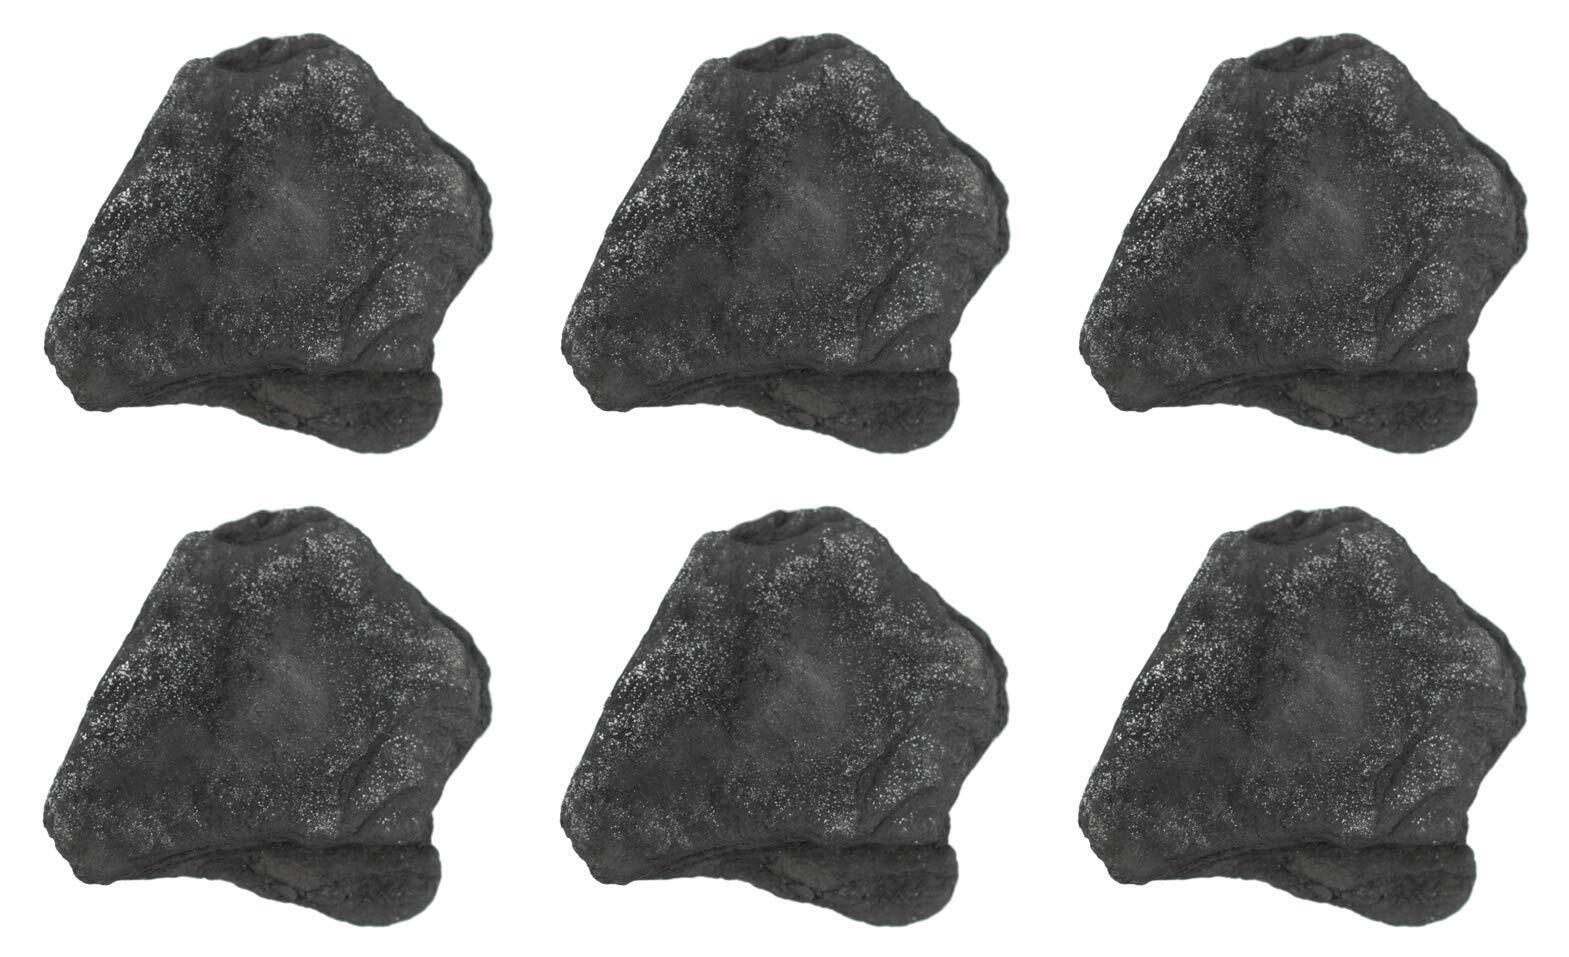 6PK Raw Anthracite Coal, Metamorphic Rock Specimens - Approx. 1\